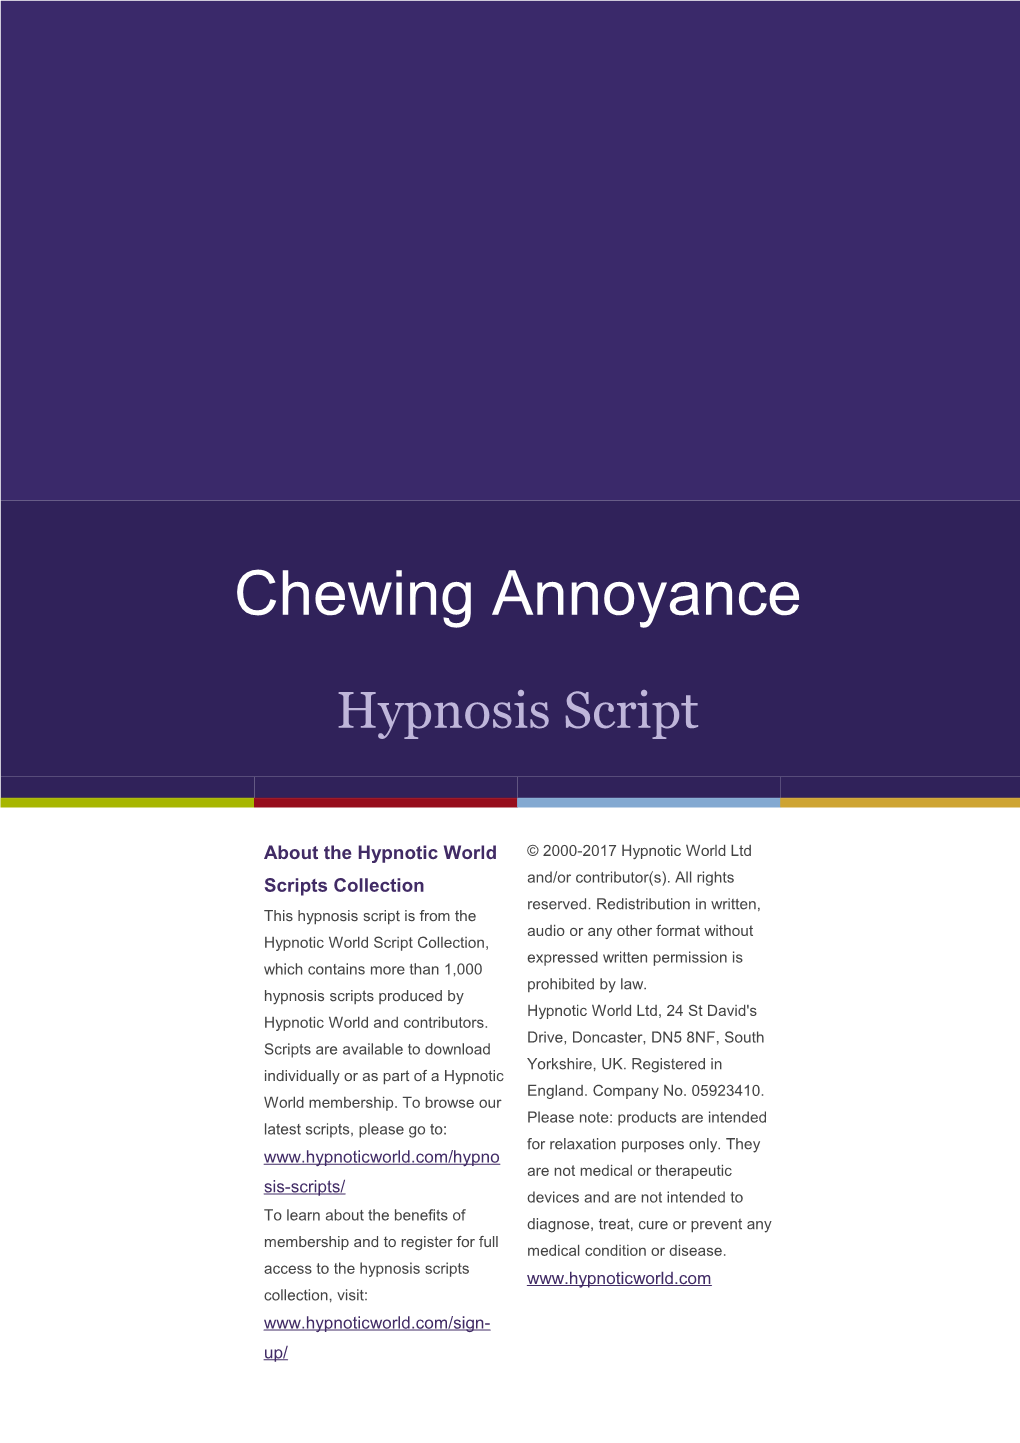 Chewing Annoyance Hypnosis Script